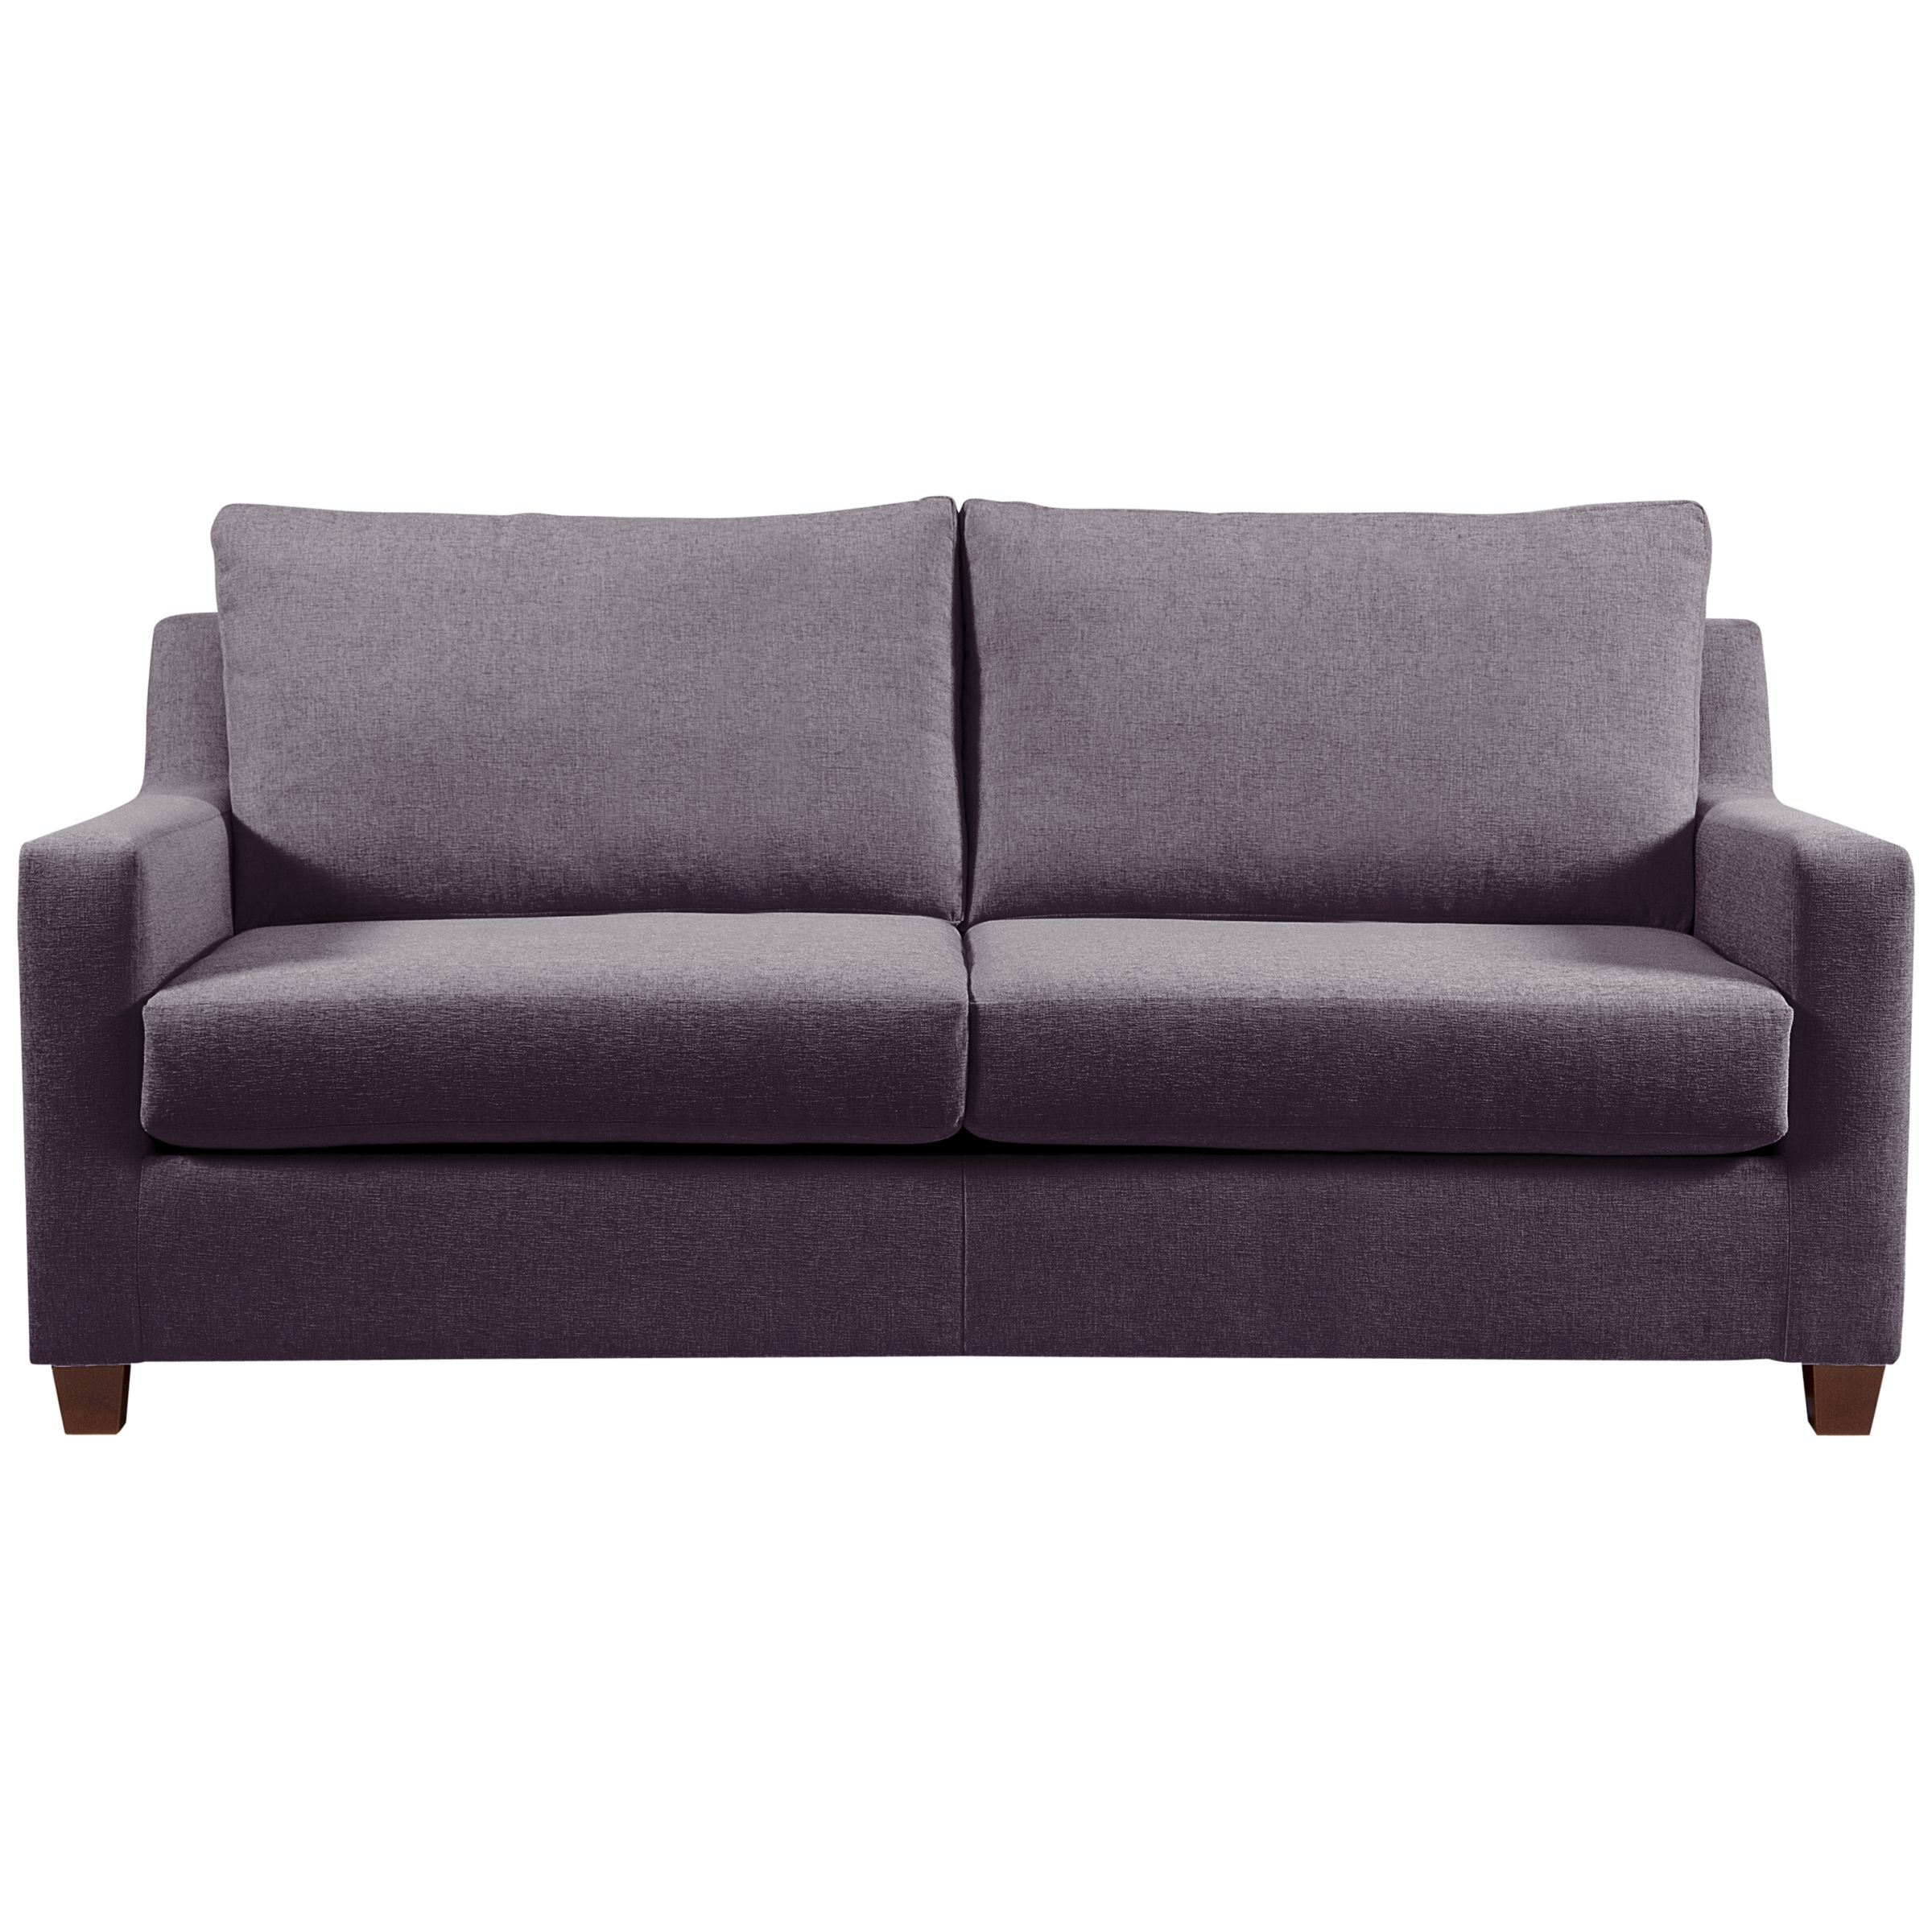 John Lewis Bizet Large Sofa Bed with Memory Foam Matress, Purple, width 208cm